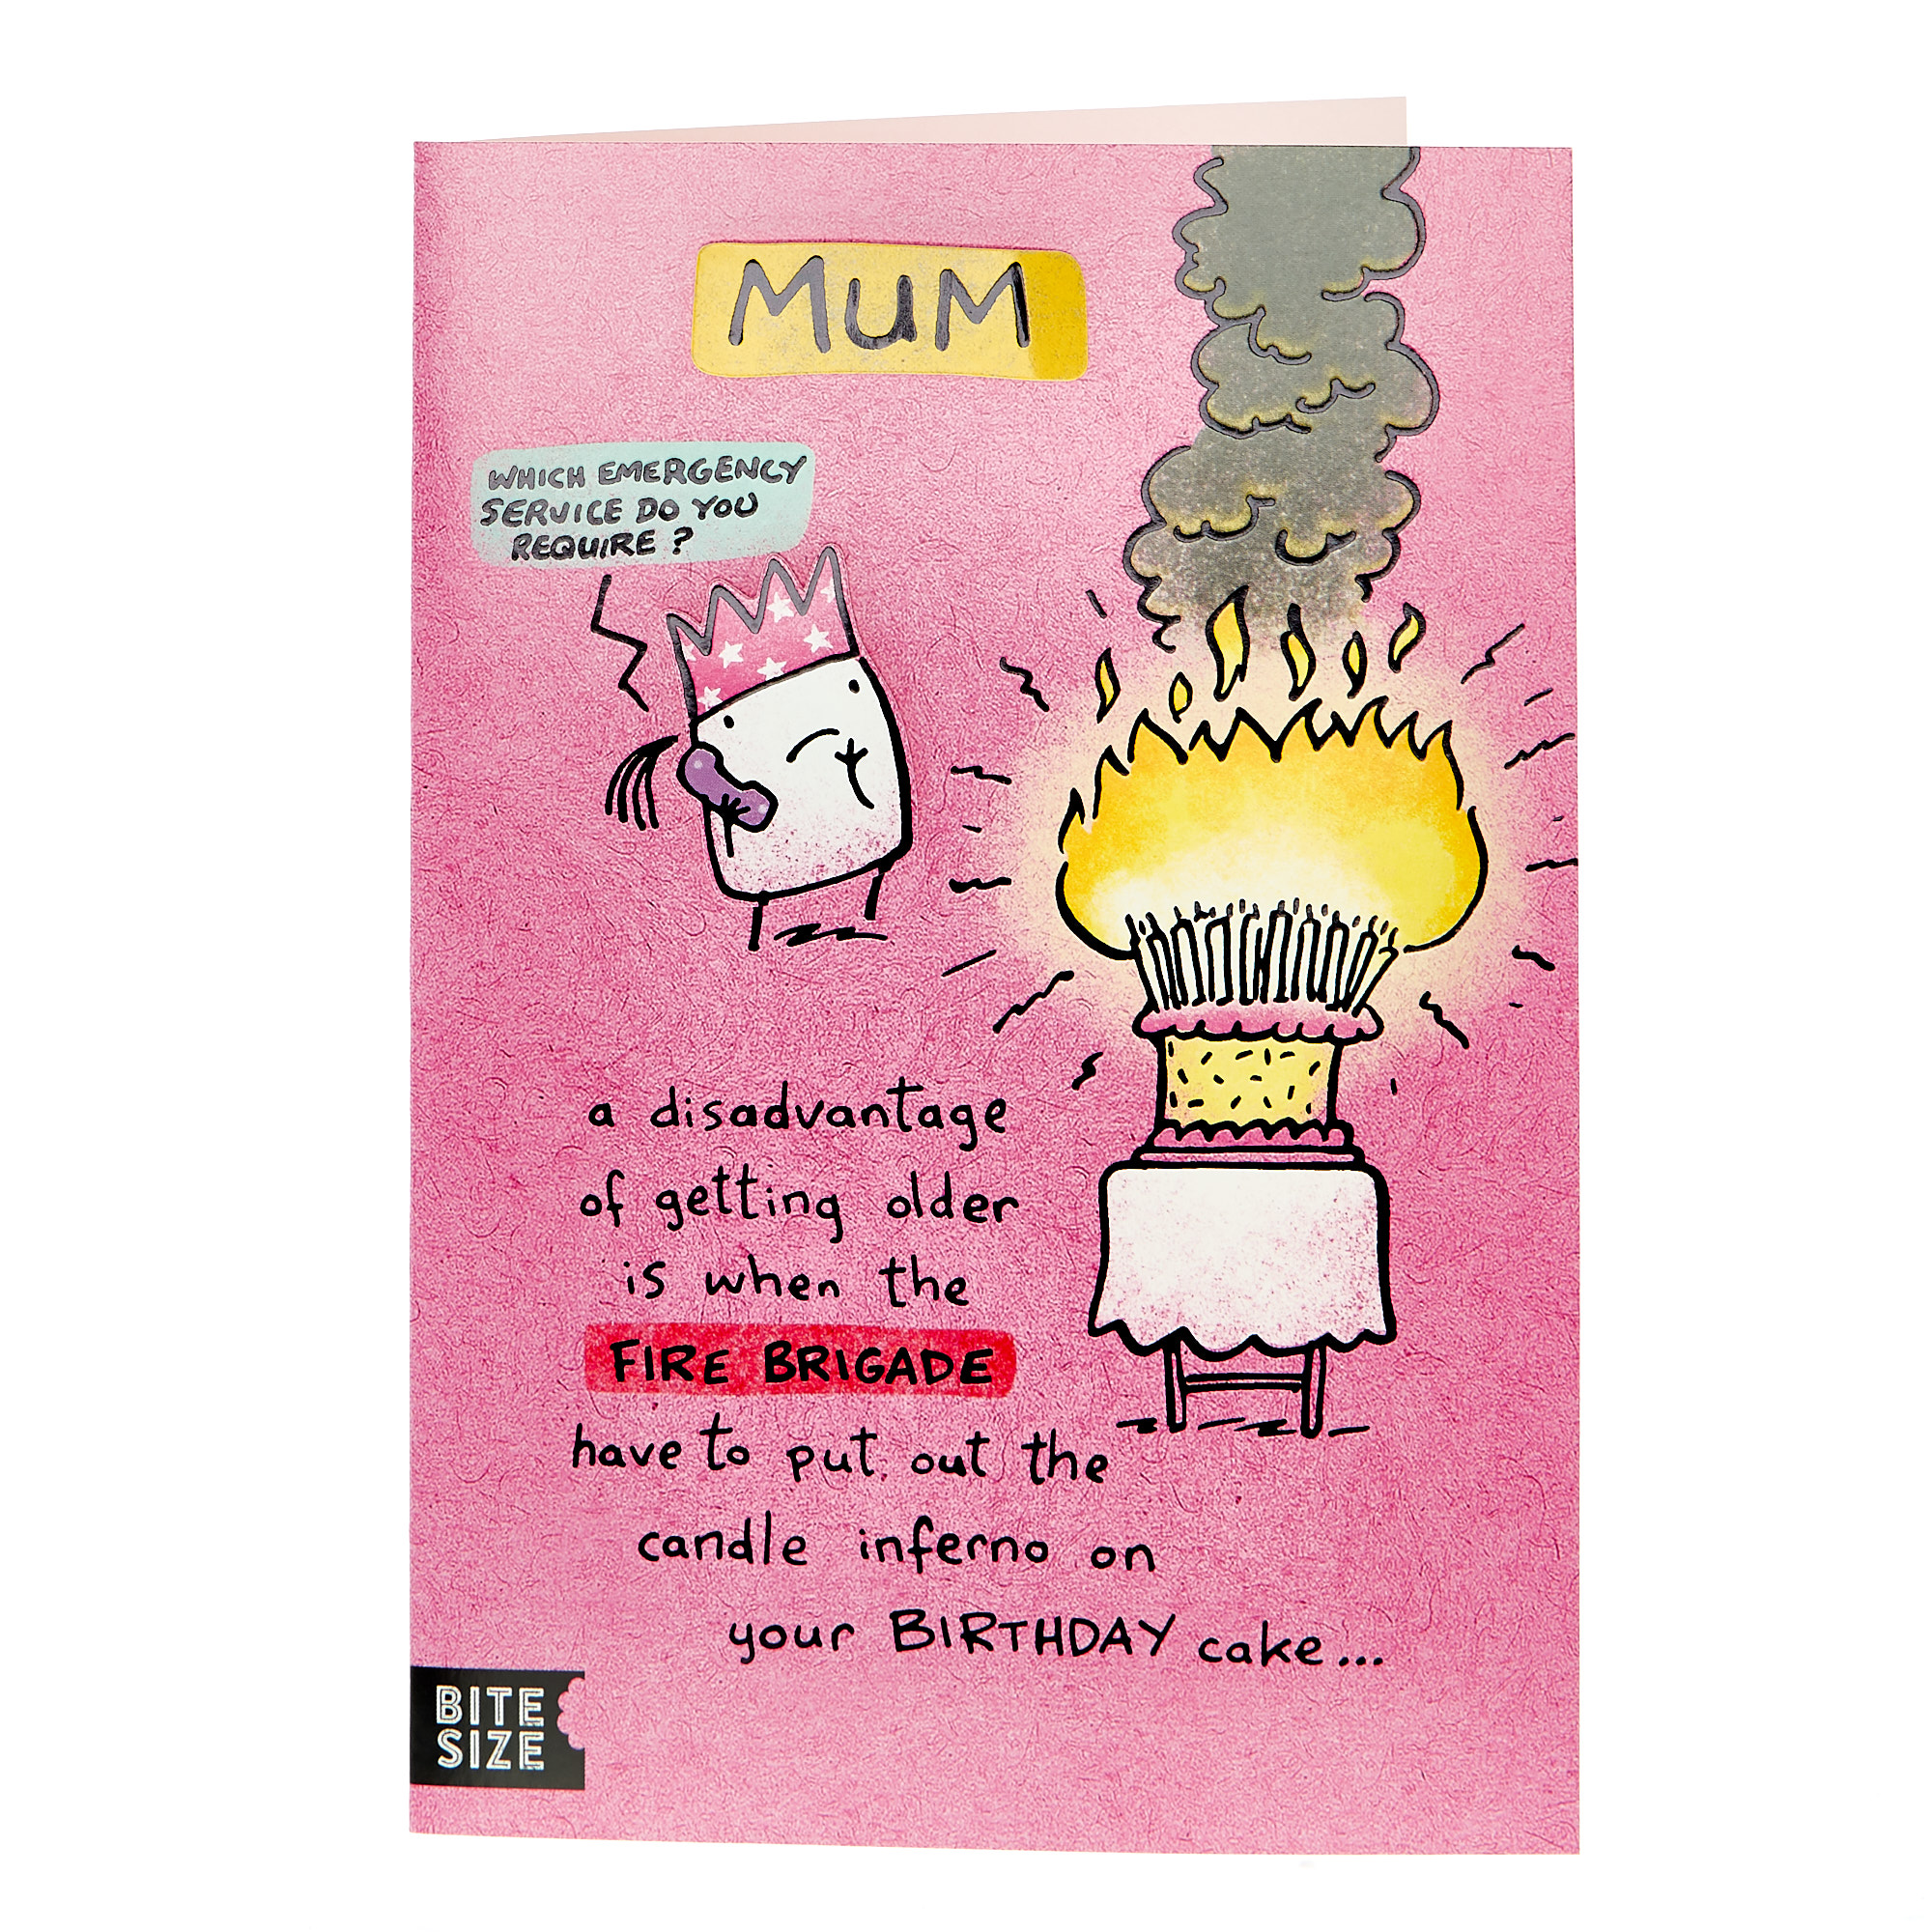 Birthday Card - Mum Candle Inferno